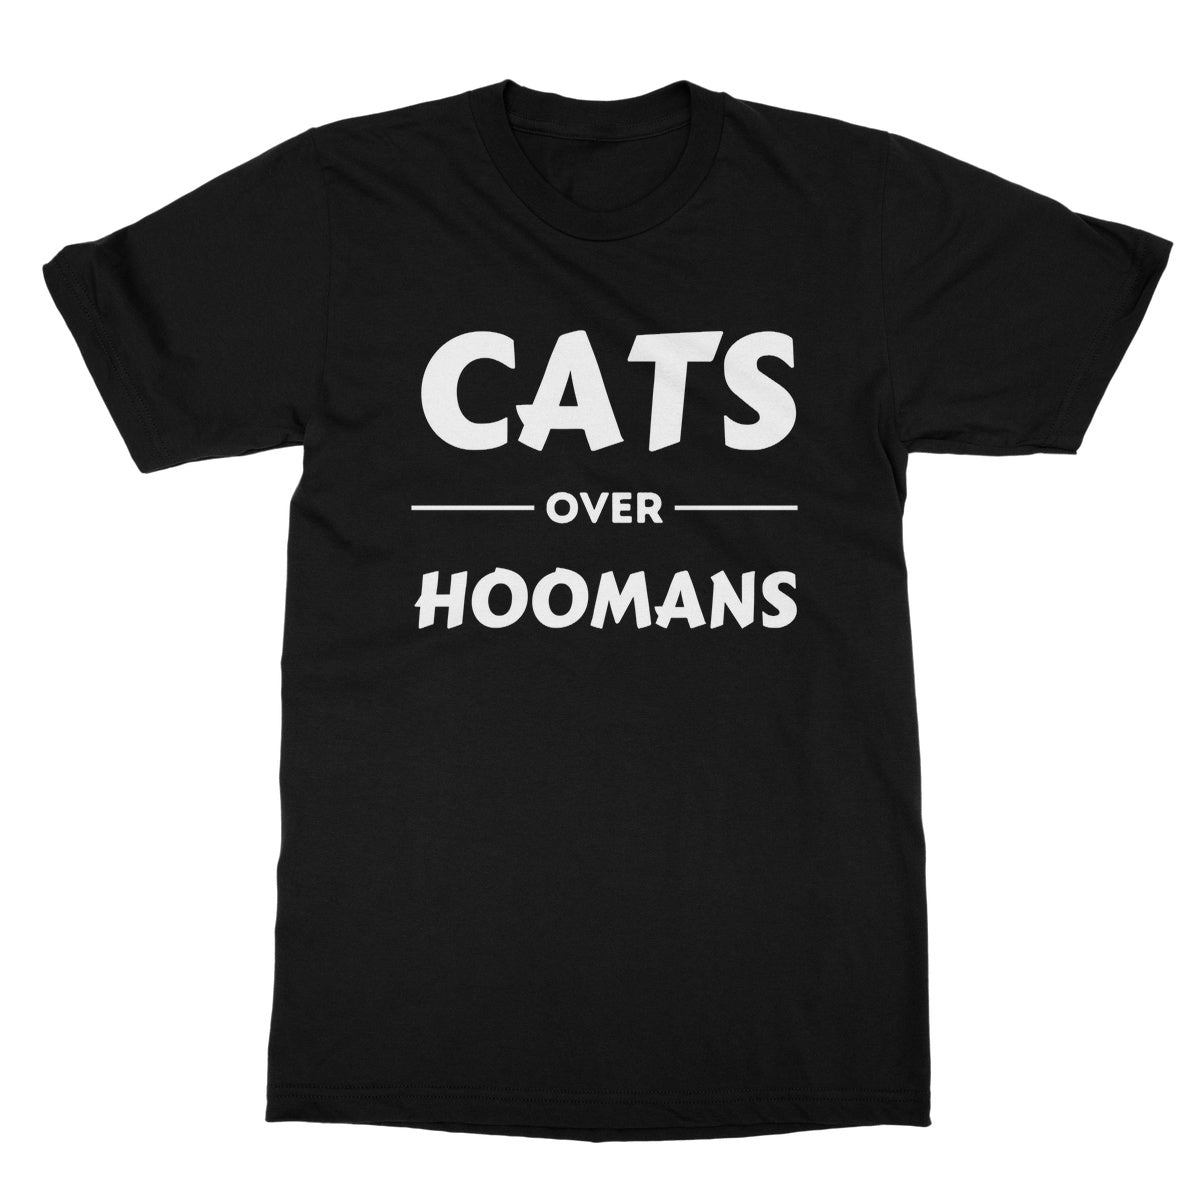 cats over hoomans t shirt black